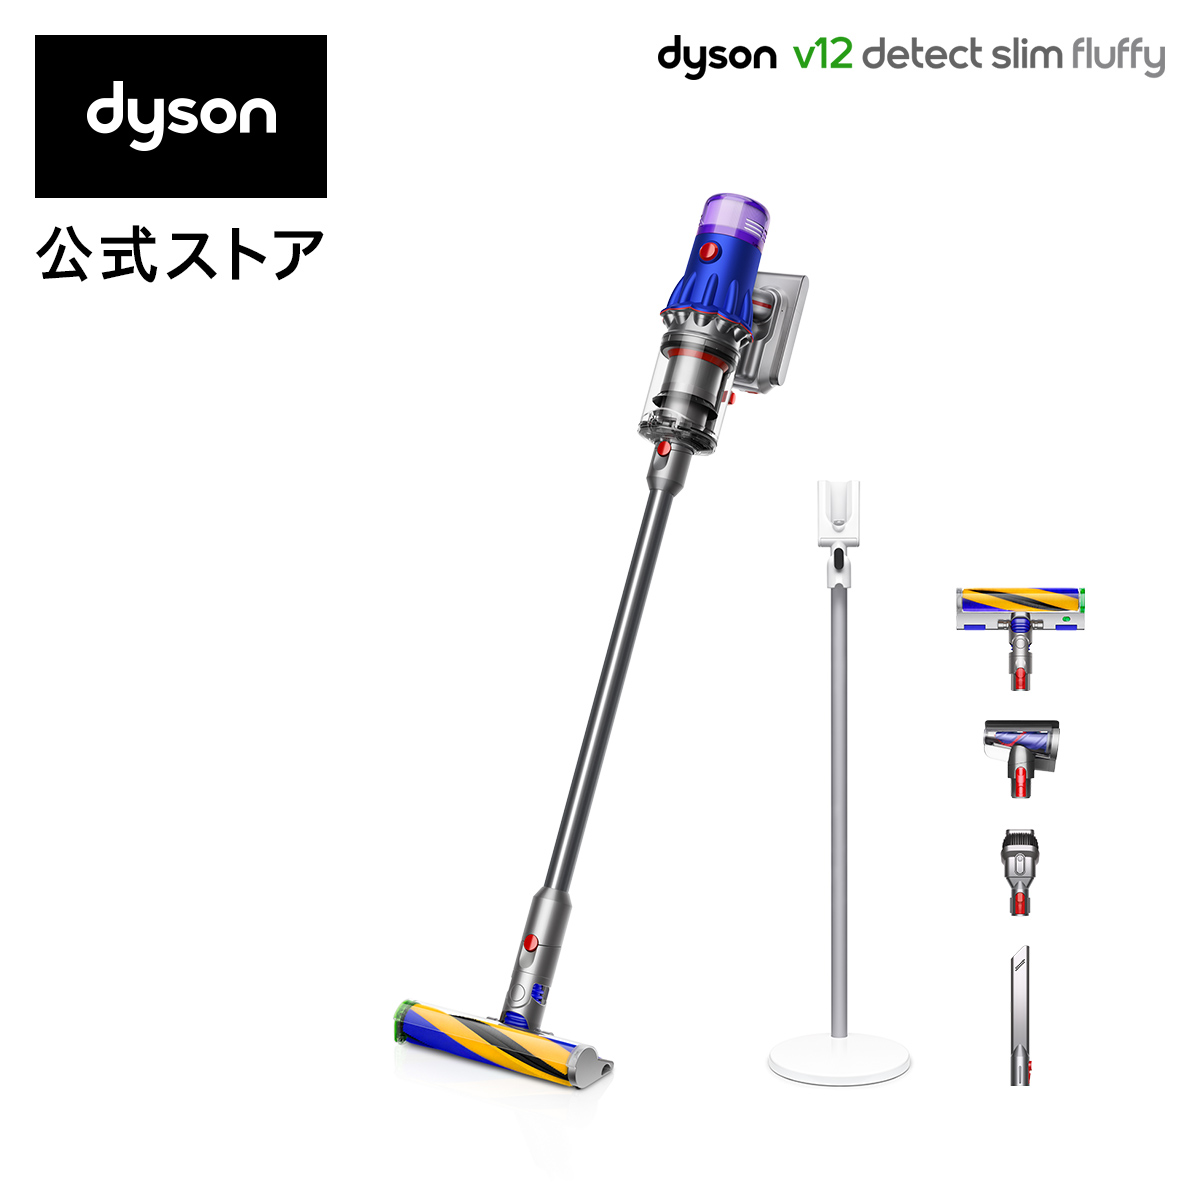 Dyson ラッピング無料 ダイソン V12 ディテクト スリム 掃除機 dyson コードレスクリーナー SV20FF 期間限定 営業 N Slim コードレス掃除機 下取り１万円割引 サイクロン式 Detect Fluffy